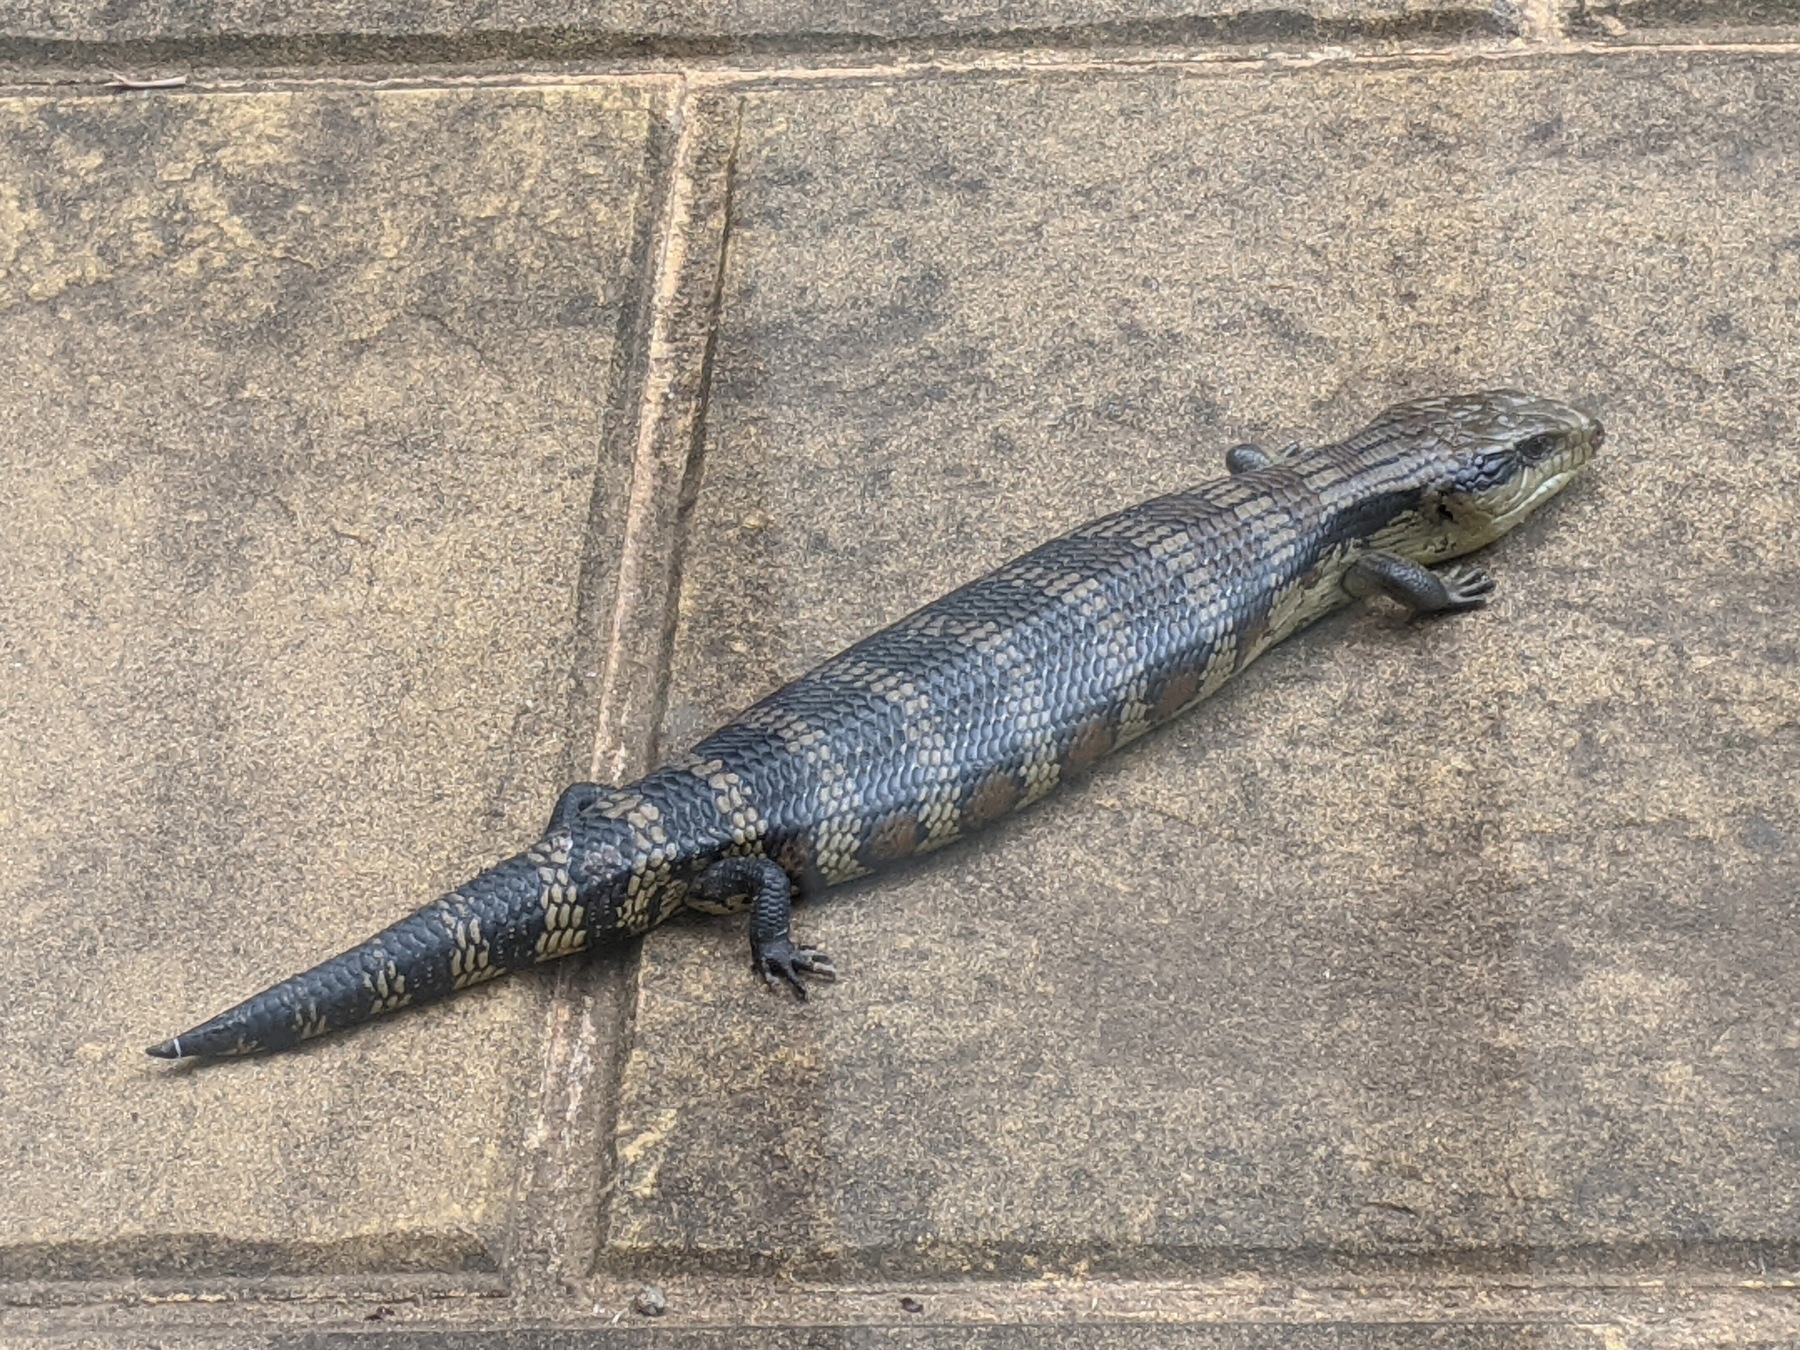 A blue-tongue lizard lying on outdoor ceramic tiles